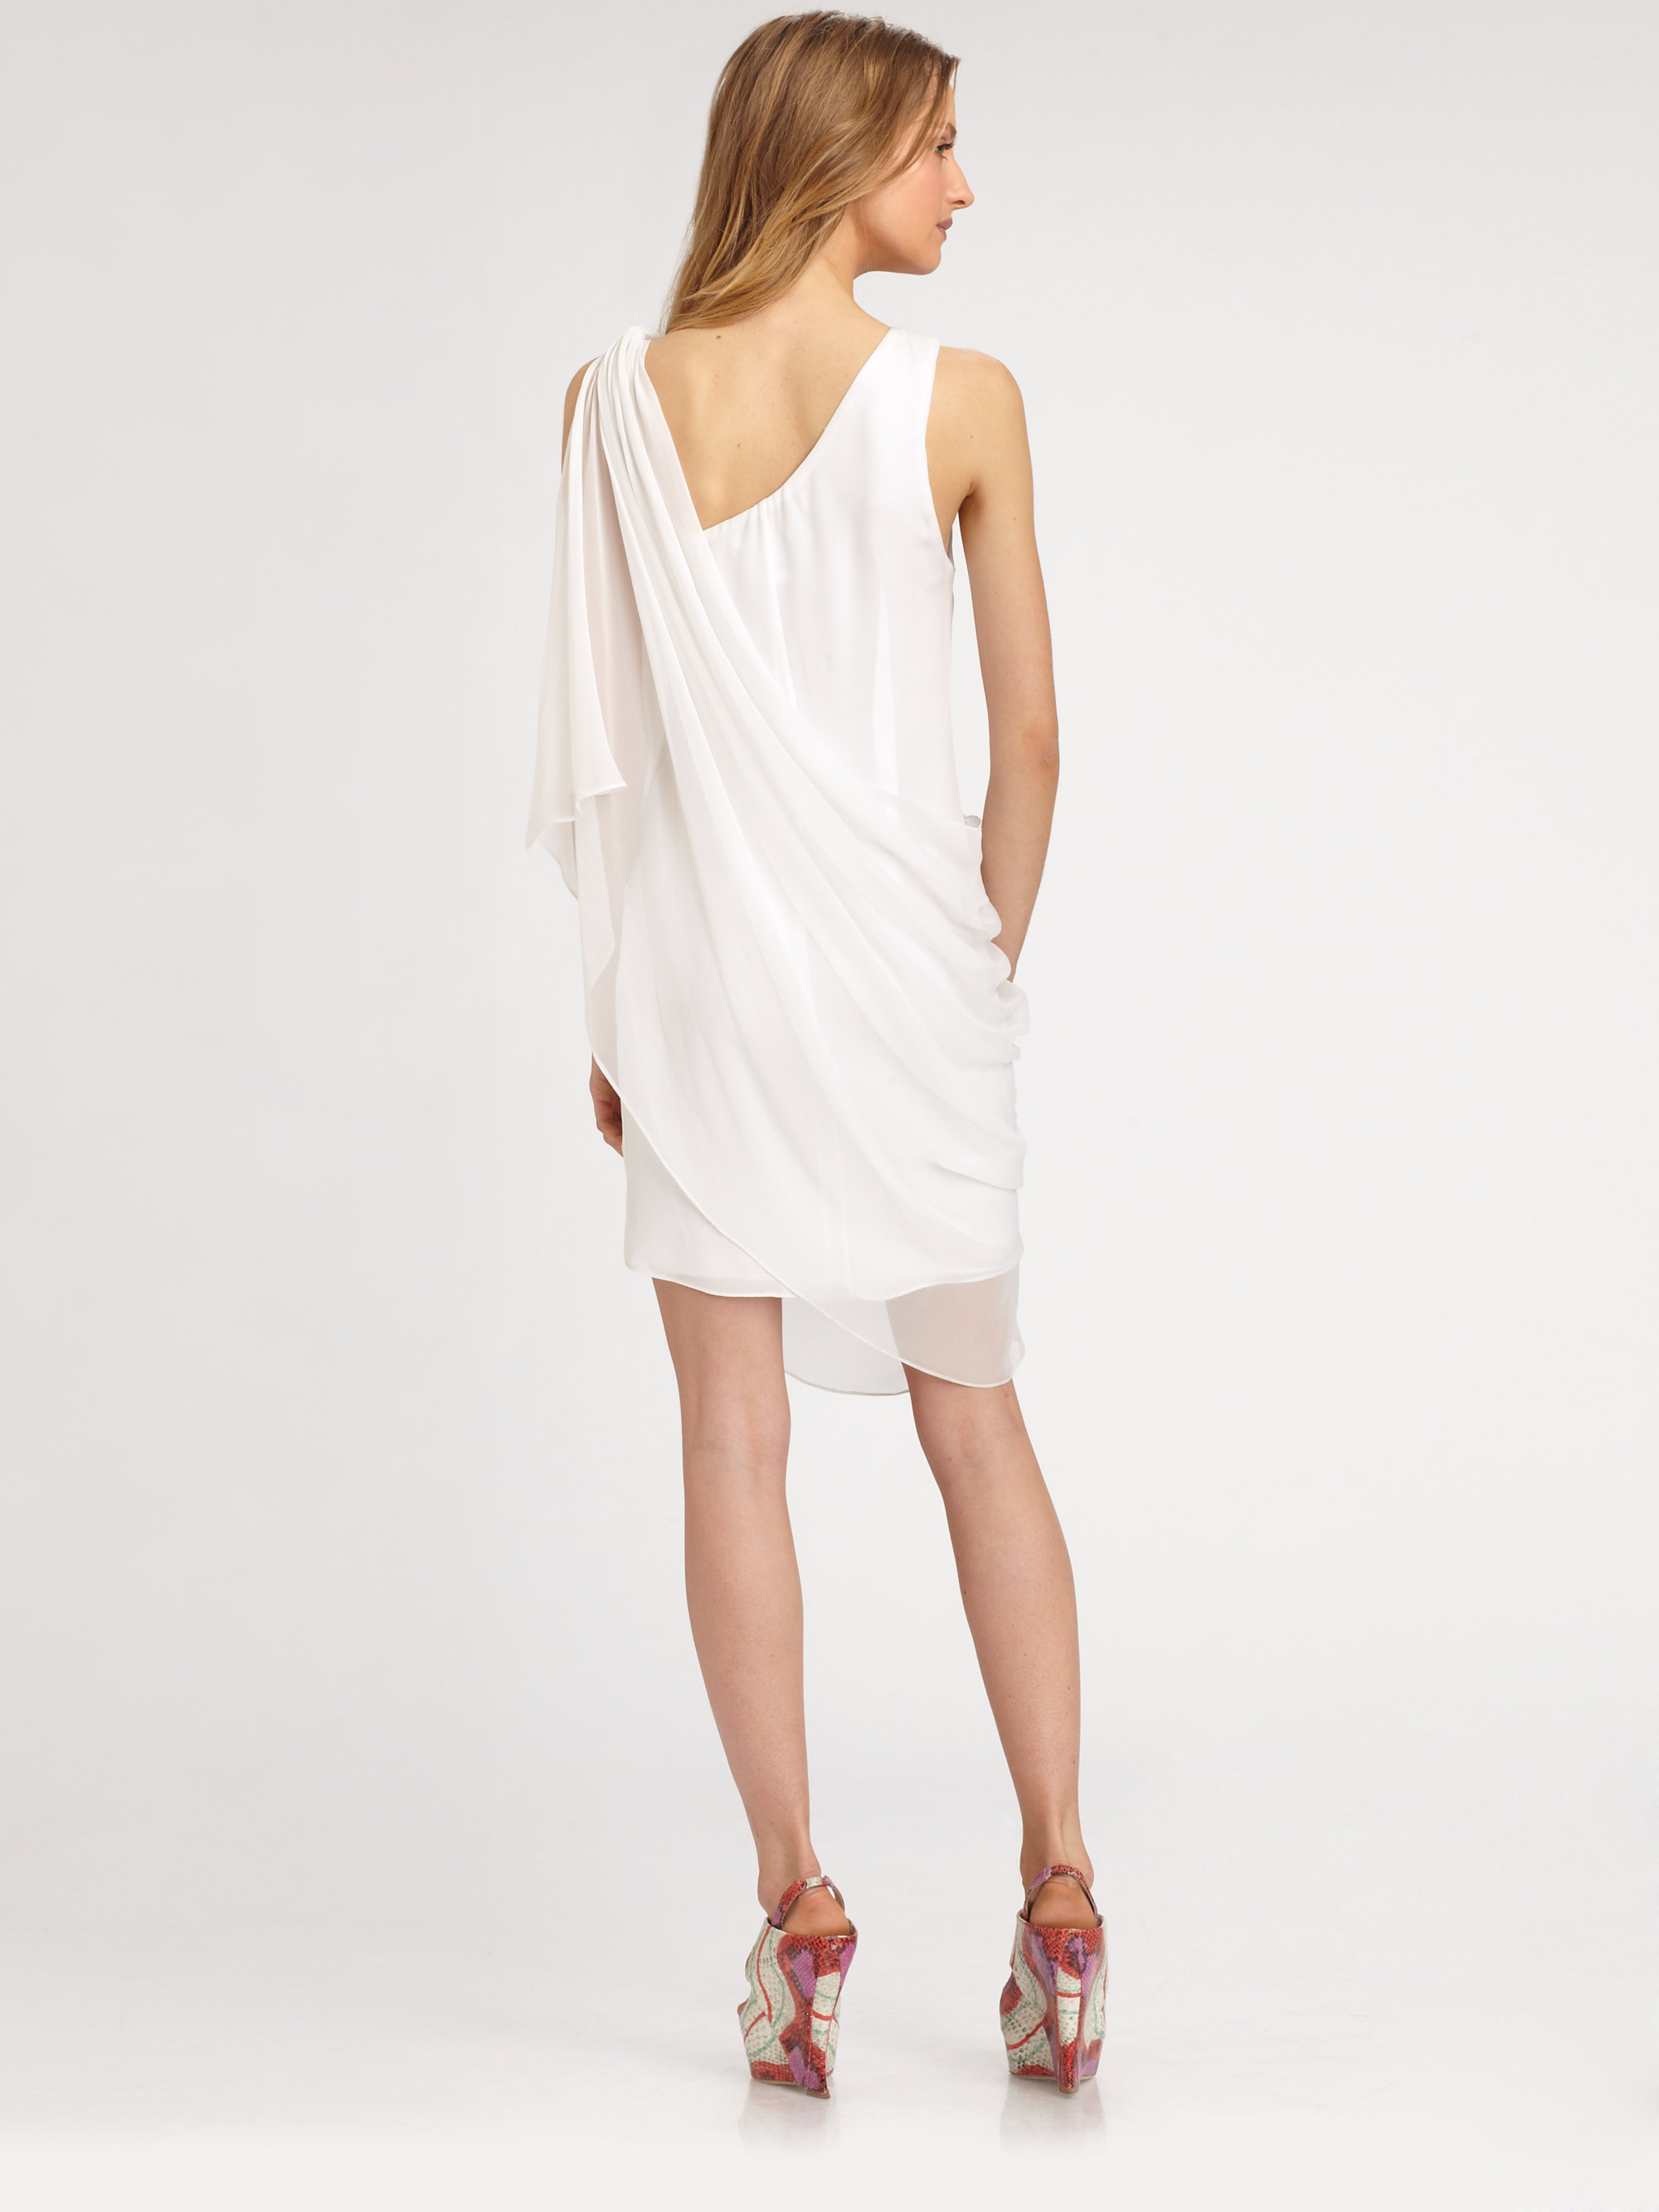 Lyst - Alice + olivia Asymmetrically Draped Silk Dress in White